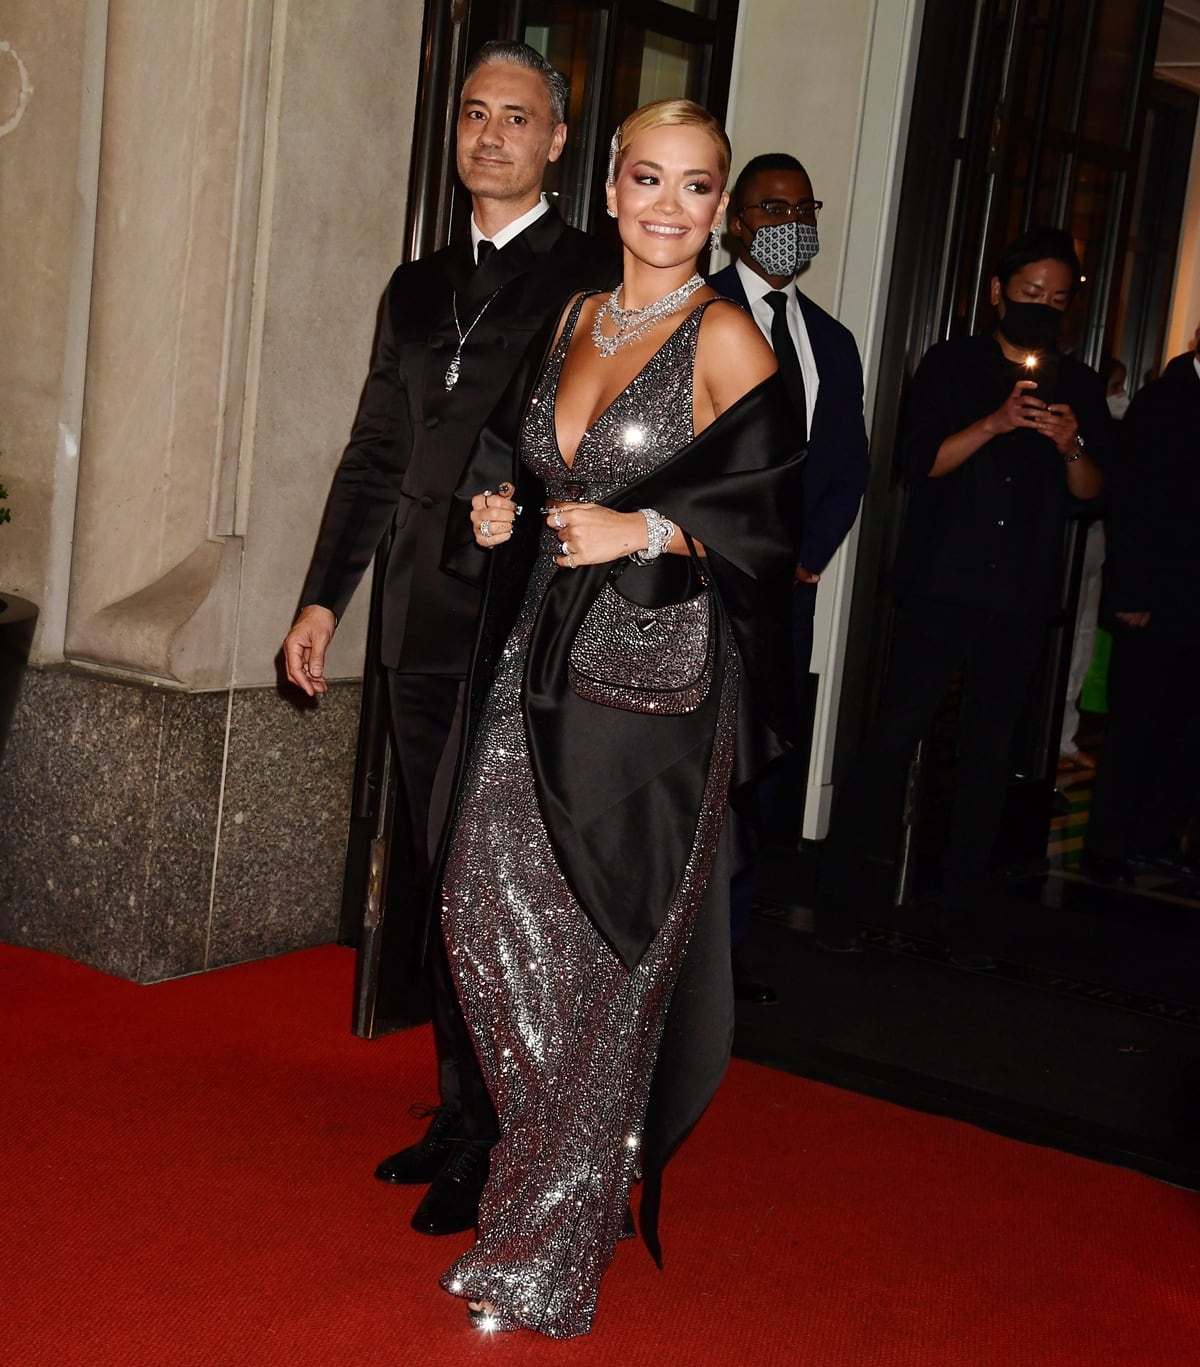 Rita Ora and Taika Waititi both wore Prada outfits at the 2021 Met Gala